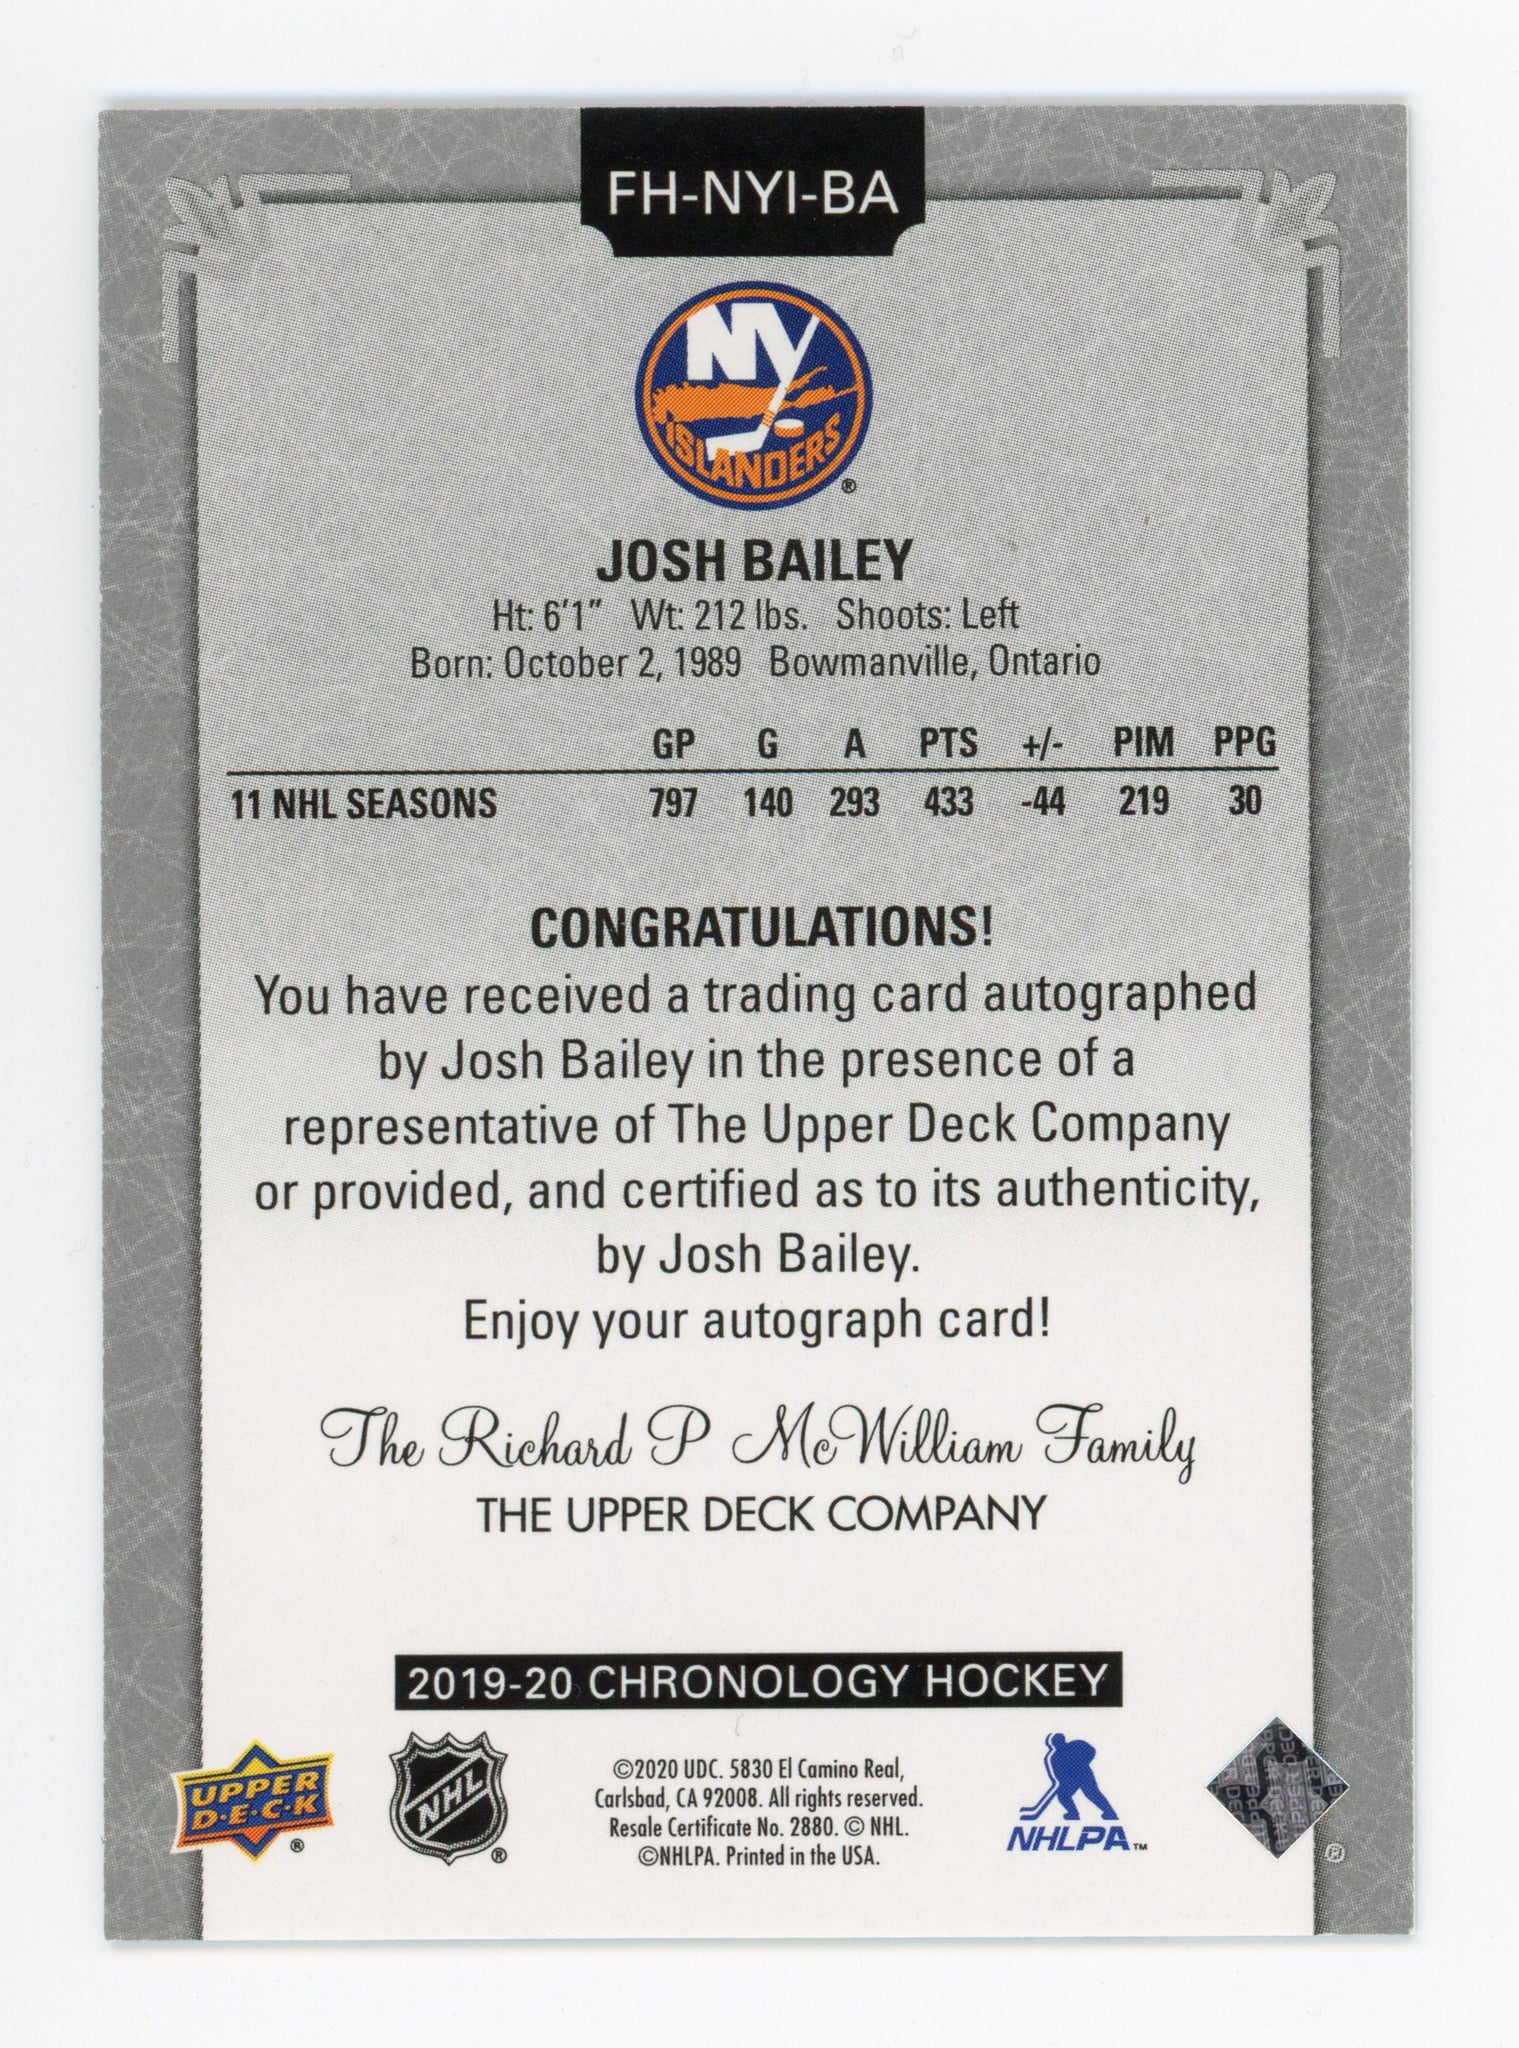 2019-2020 Josh Bailey Autographed Chronology New York Islanders # FH-NYI-BA